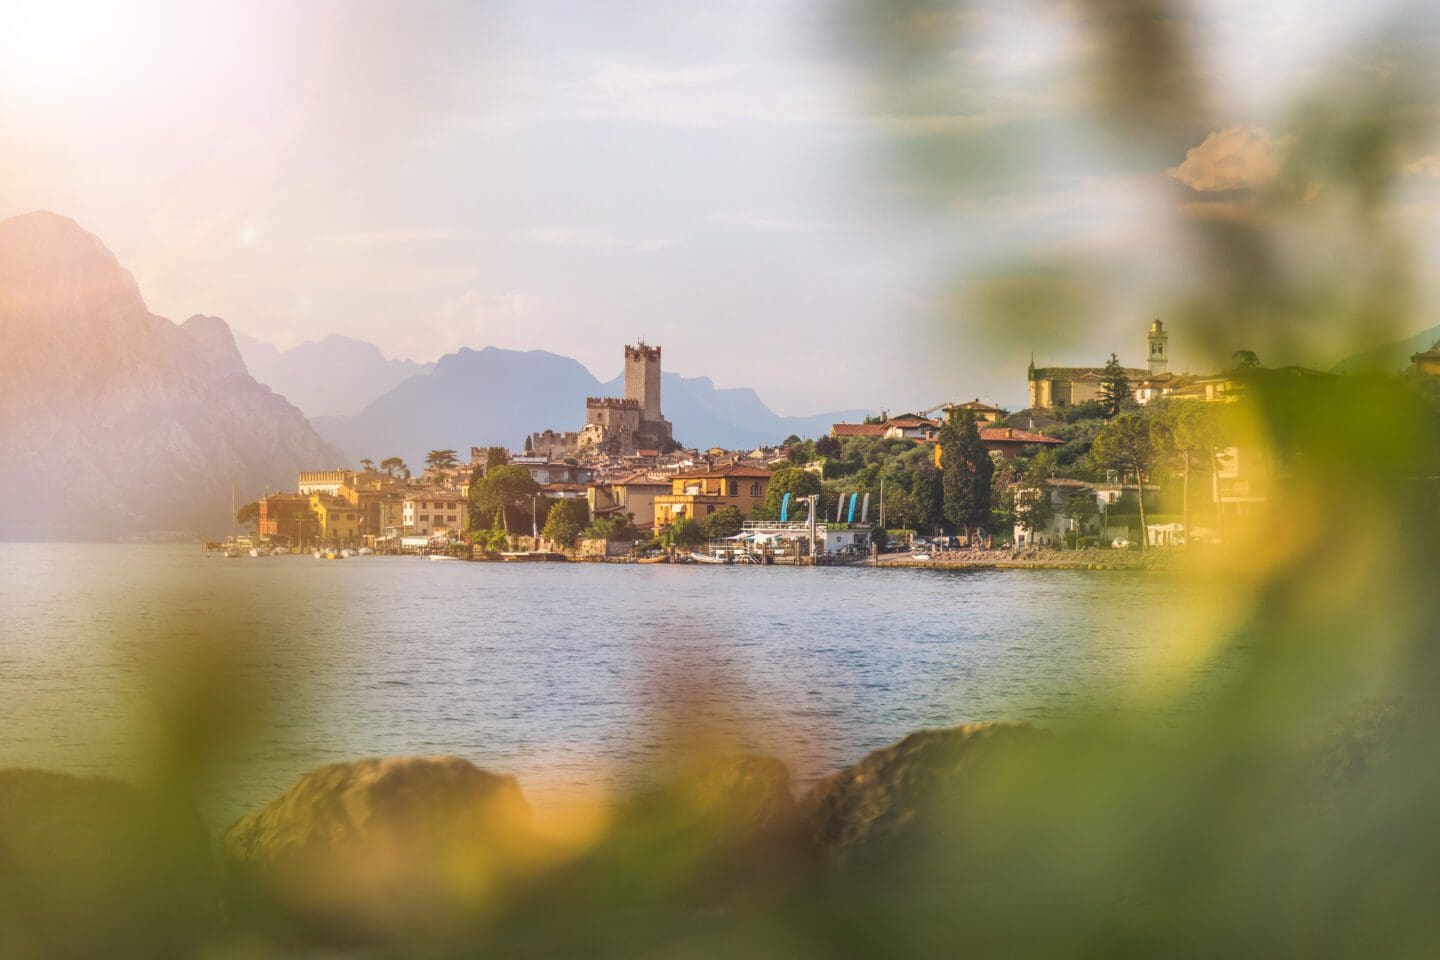 Road Trip Guide to Lago di Garda